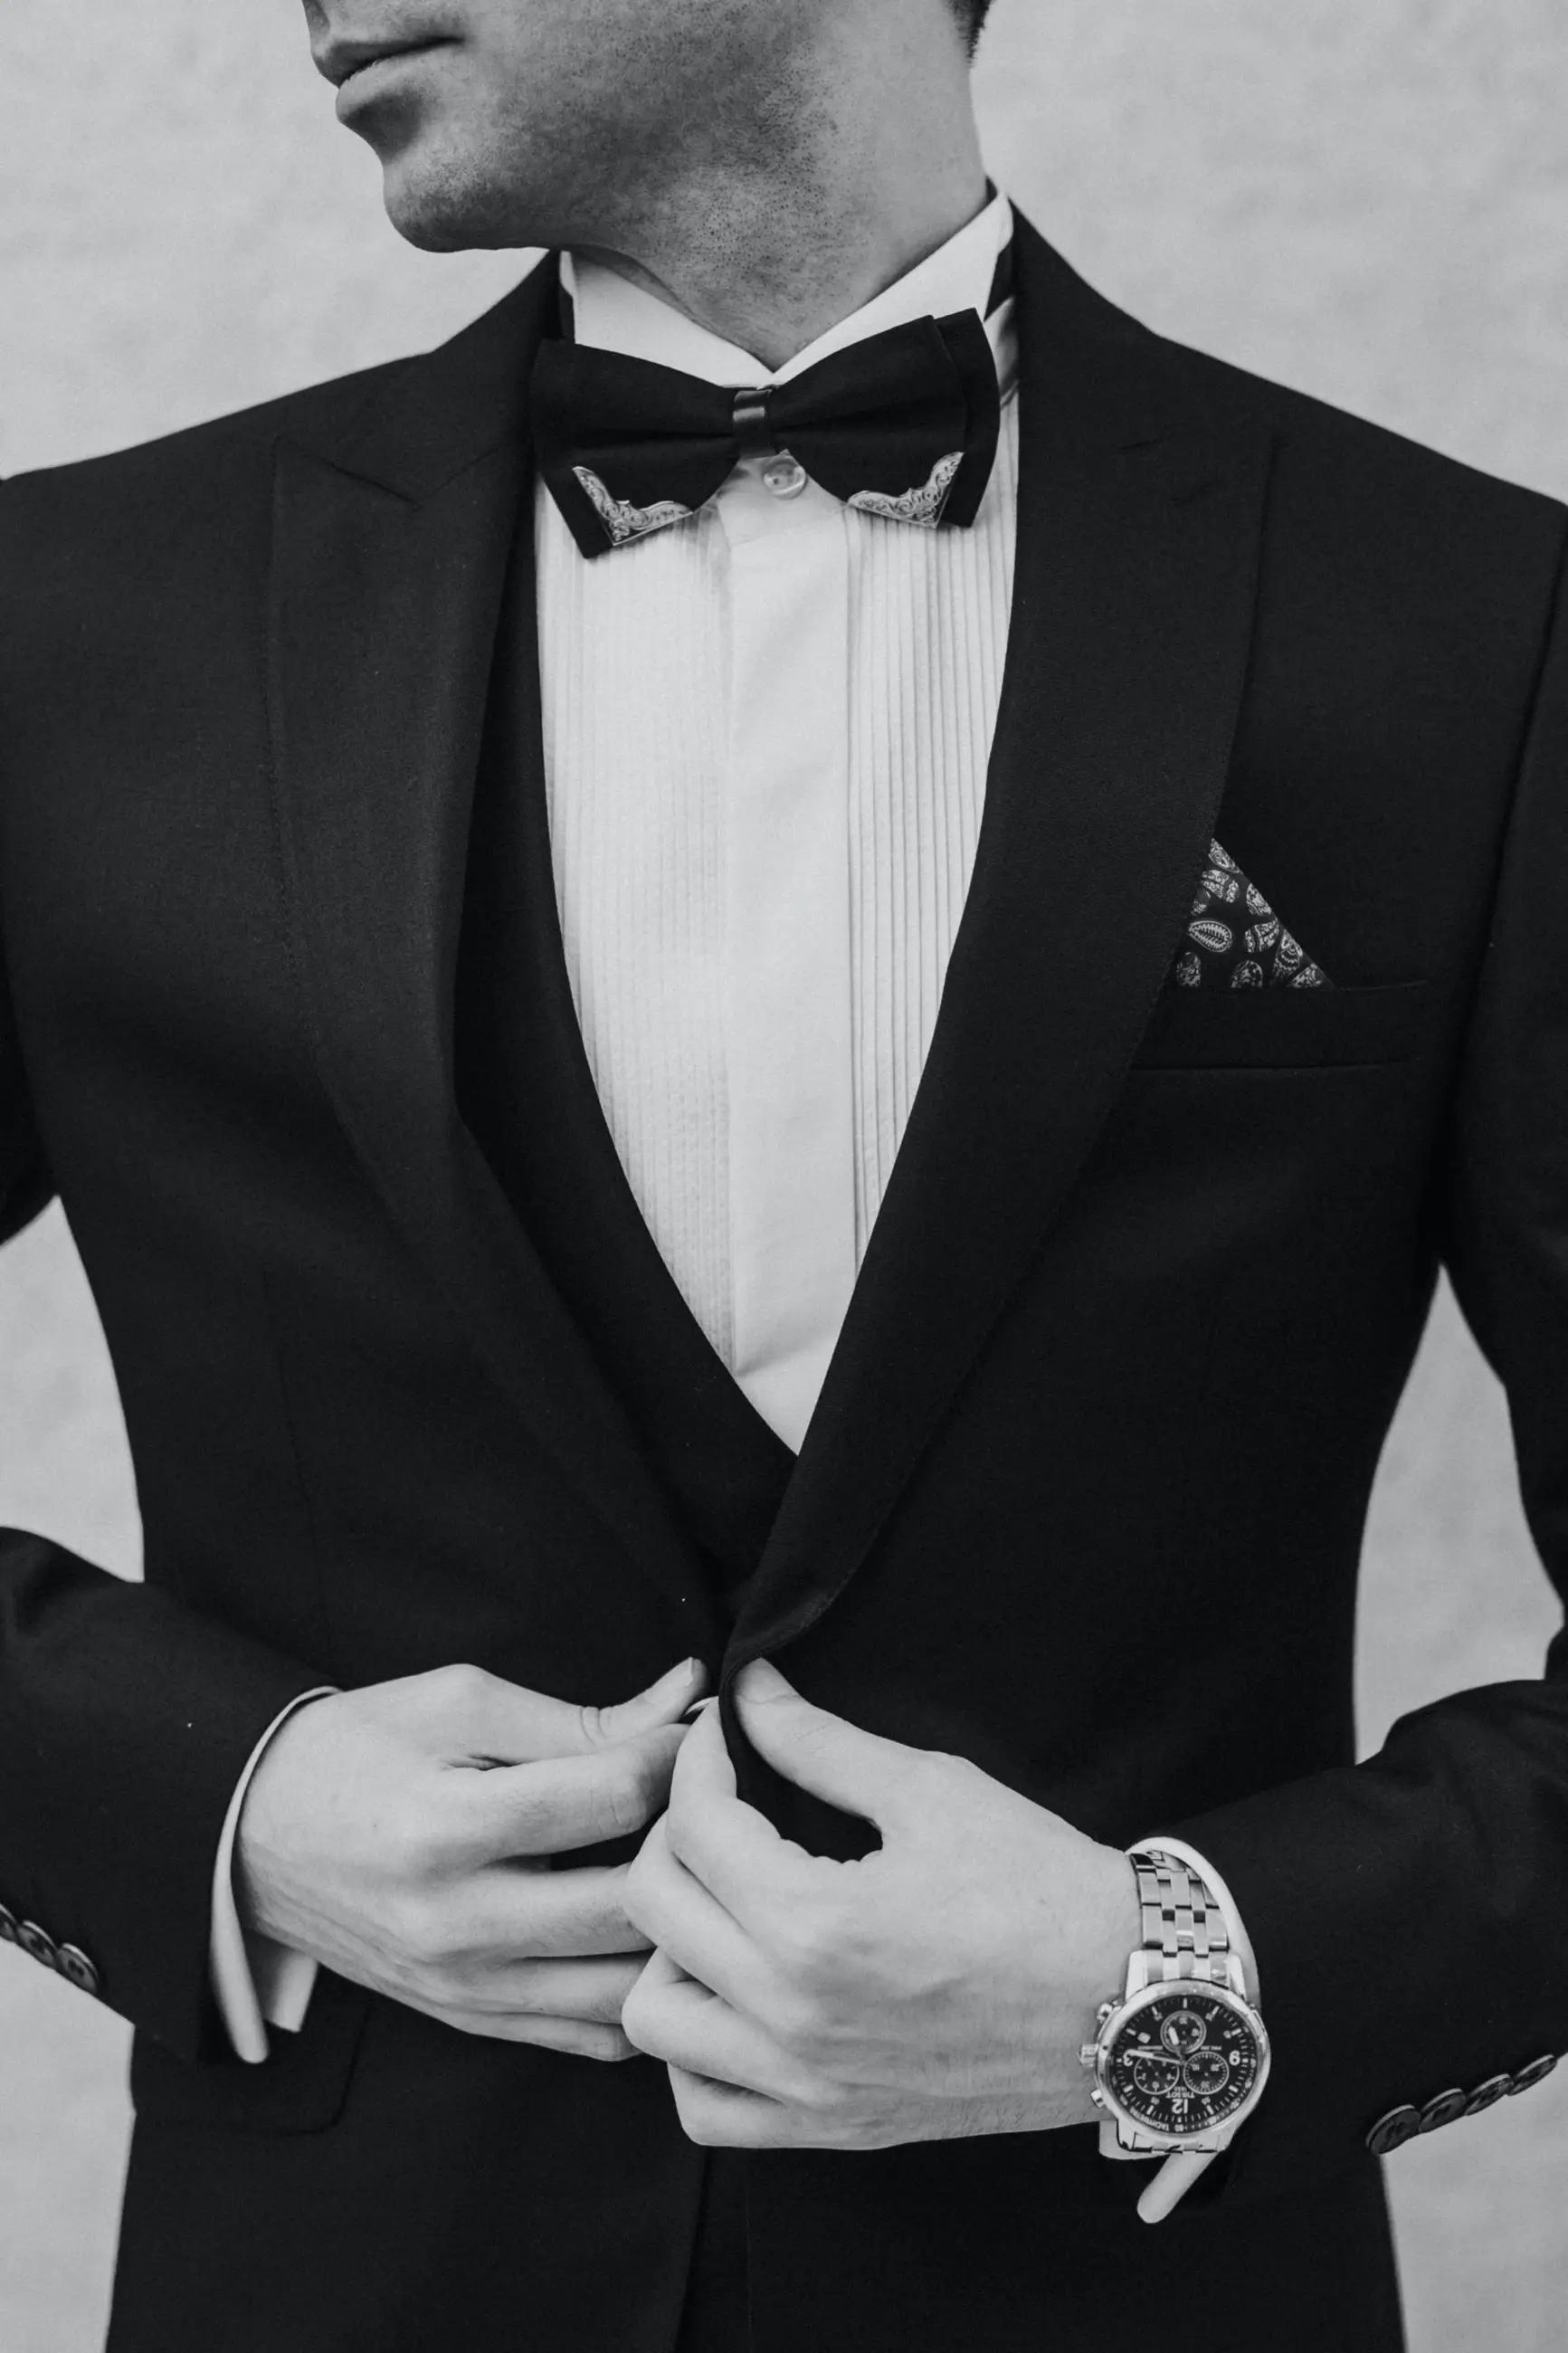 Rental Suits and Tuxedos through Malmrose Image